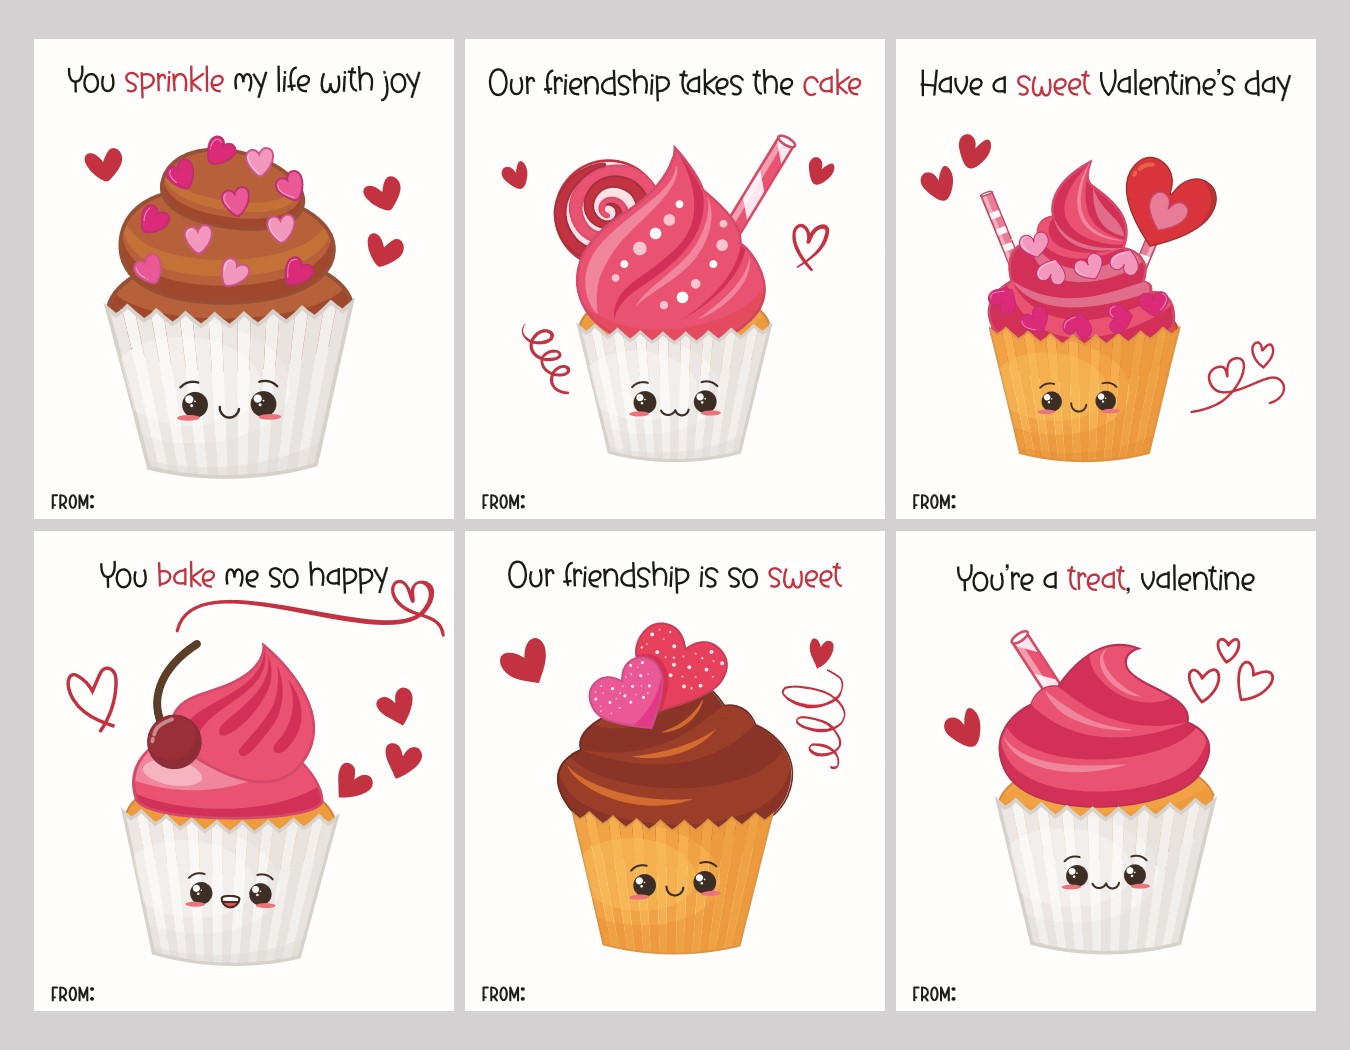 Super Cute Cupcake Valentine Cards! #FreePrintable